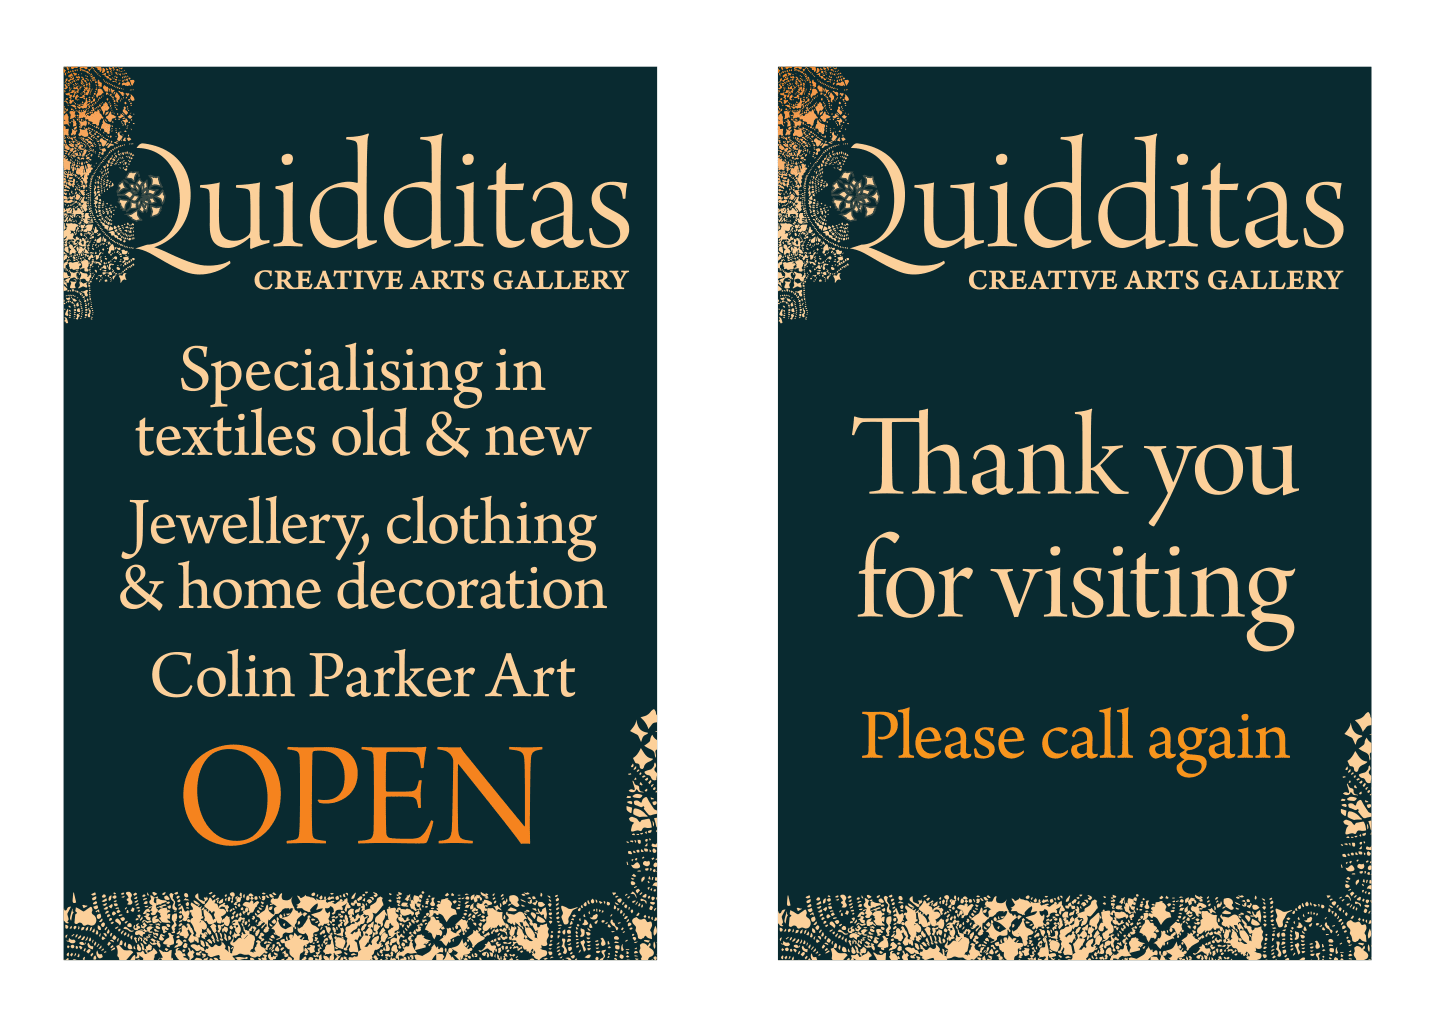 Quidditas Creative Arts Gallery A-Frame sign